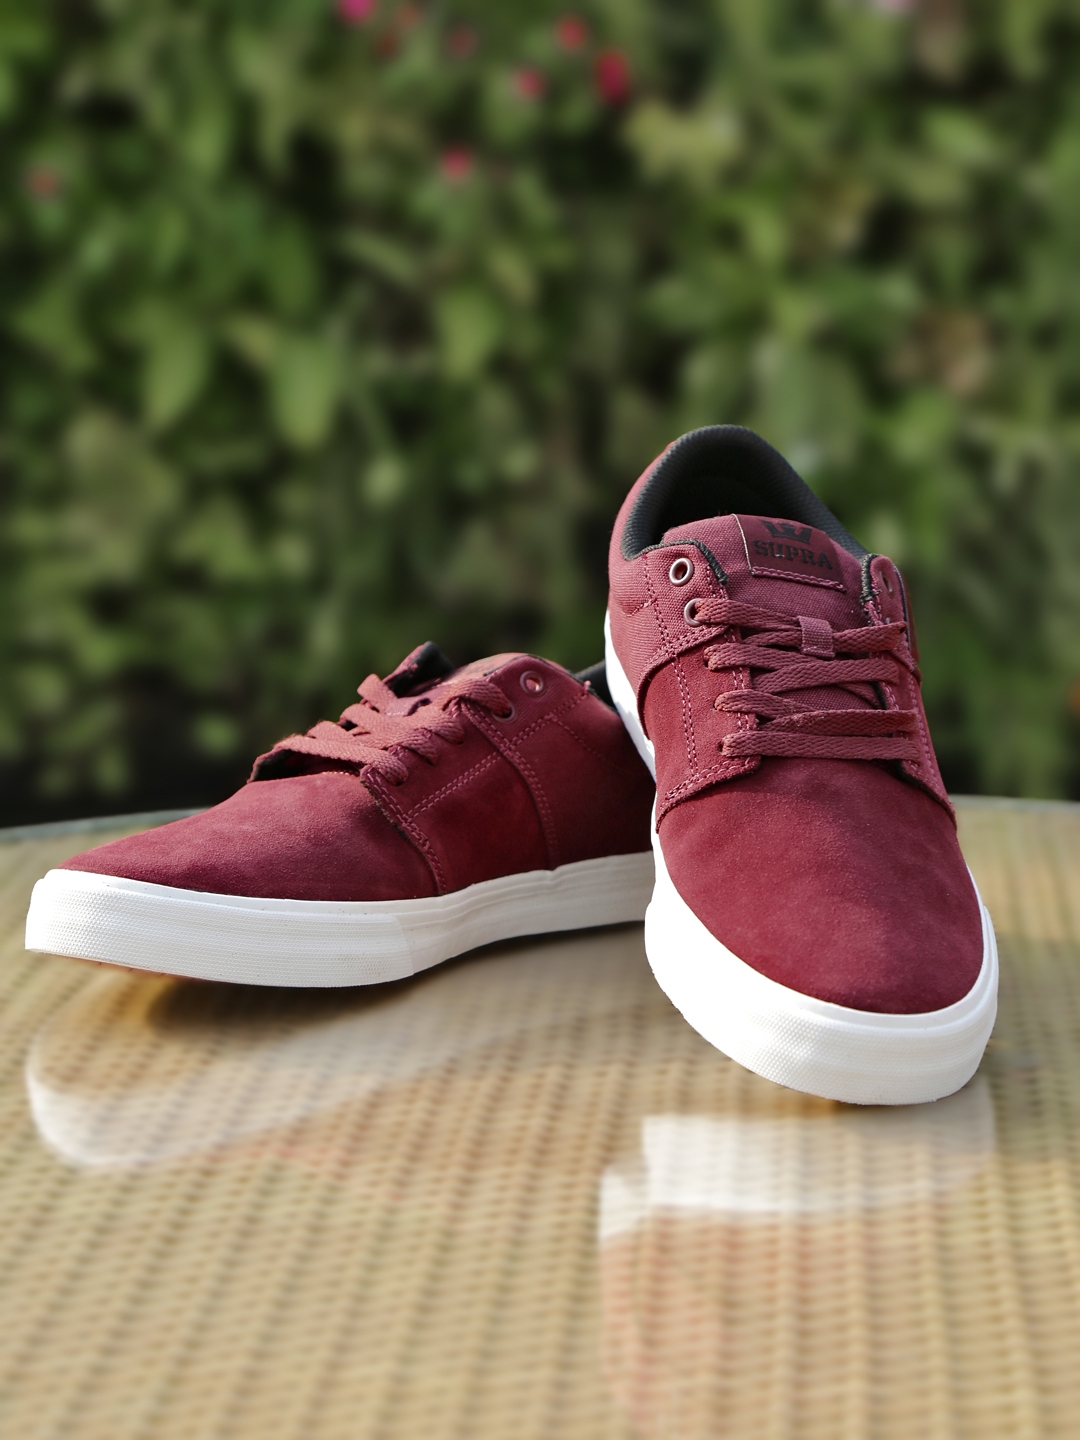 burgundy skate shoes